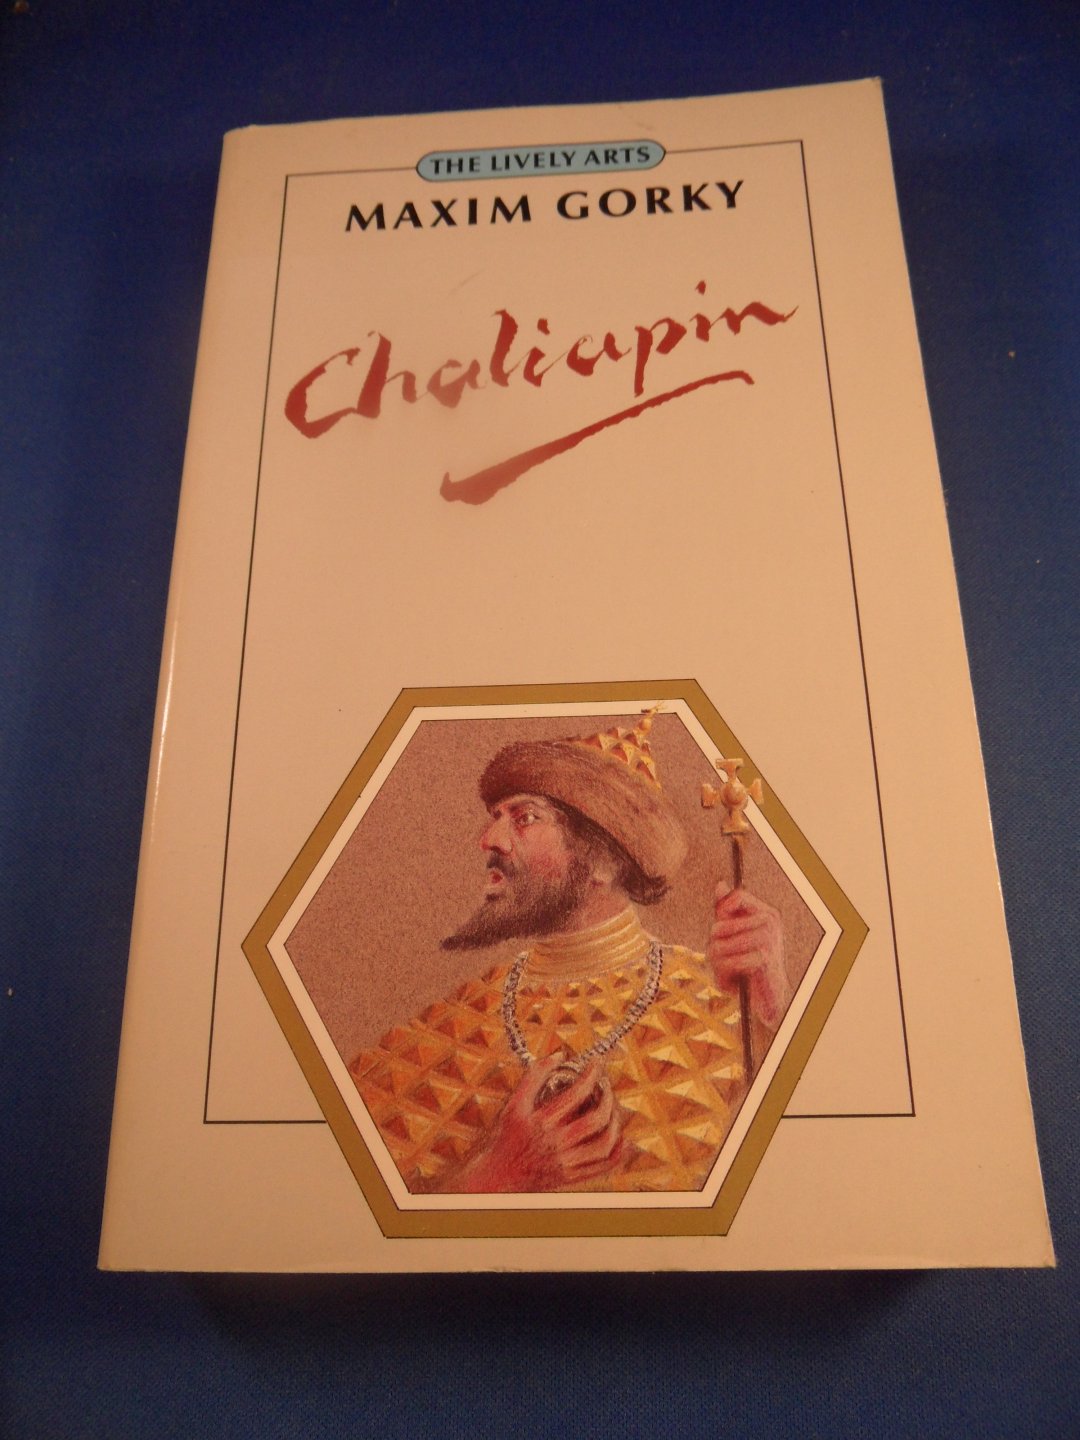 Gorky, Maxim - Chaliapin. Serie the lively arts